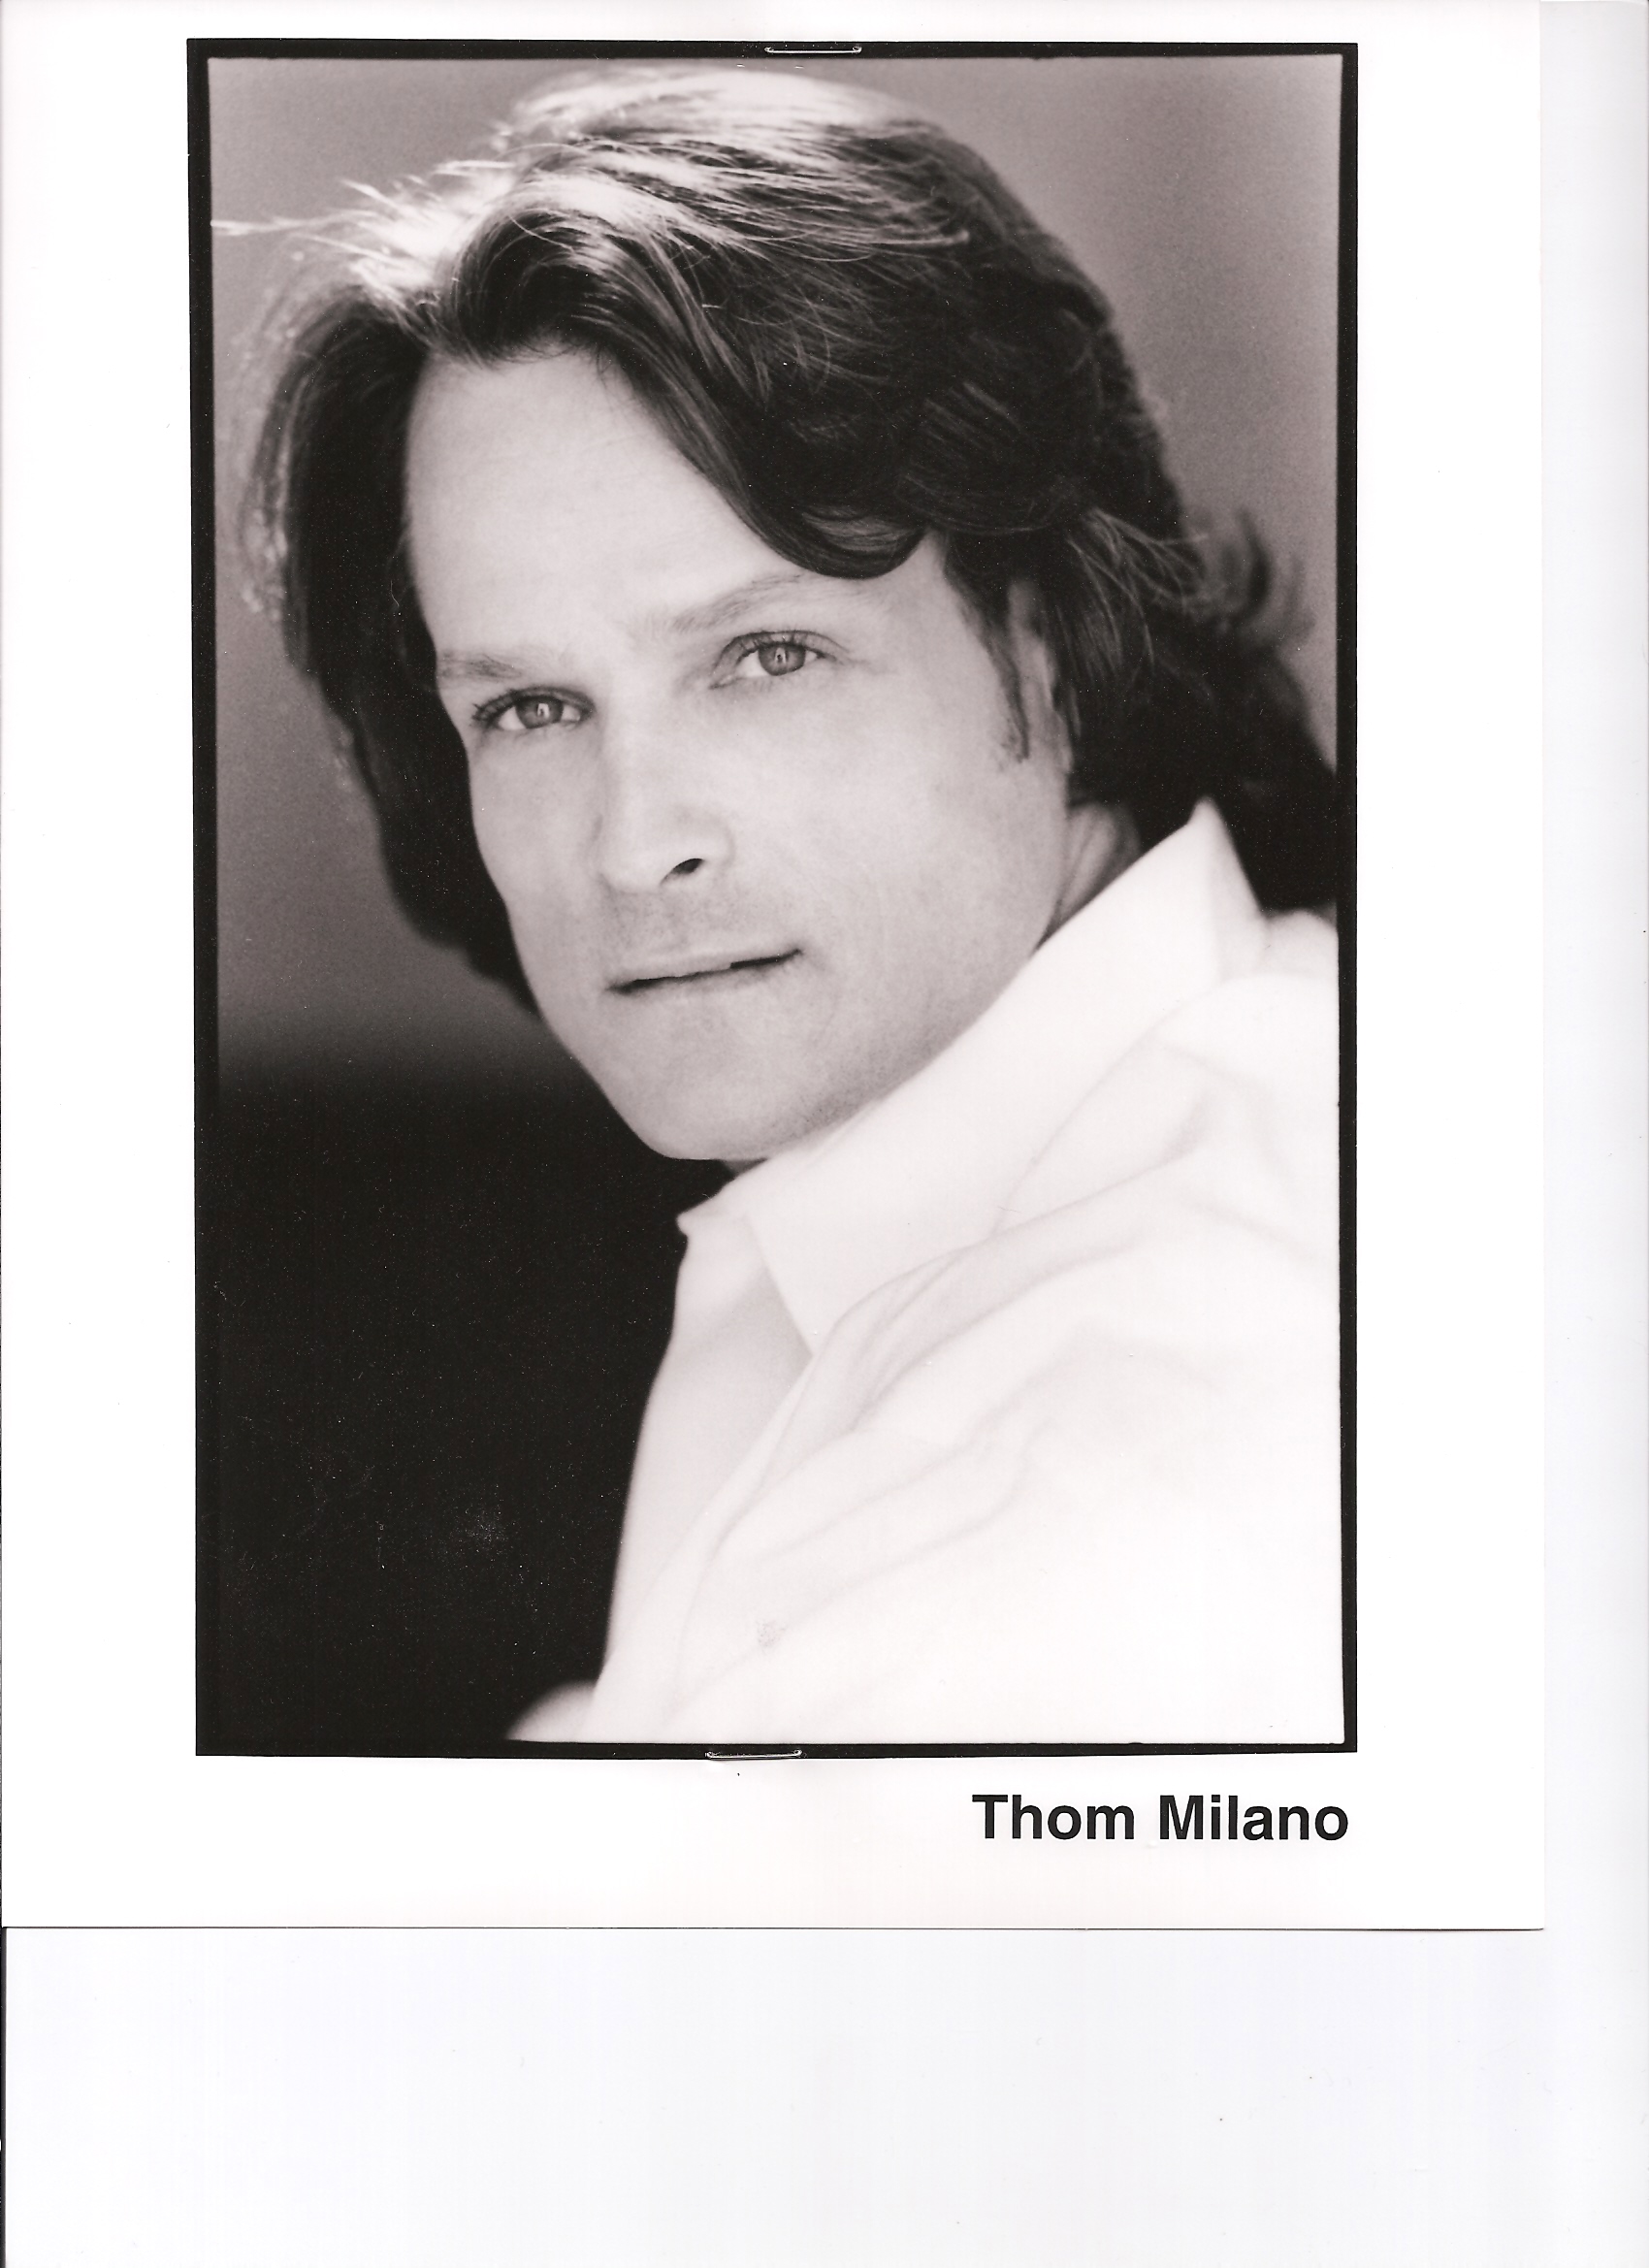 Thom Milano